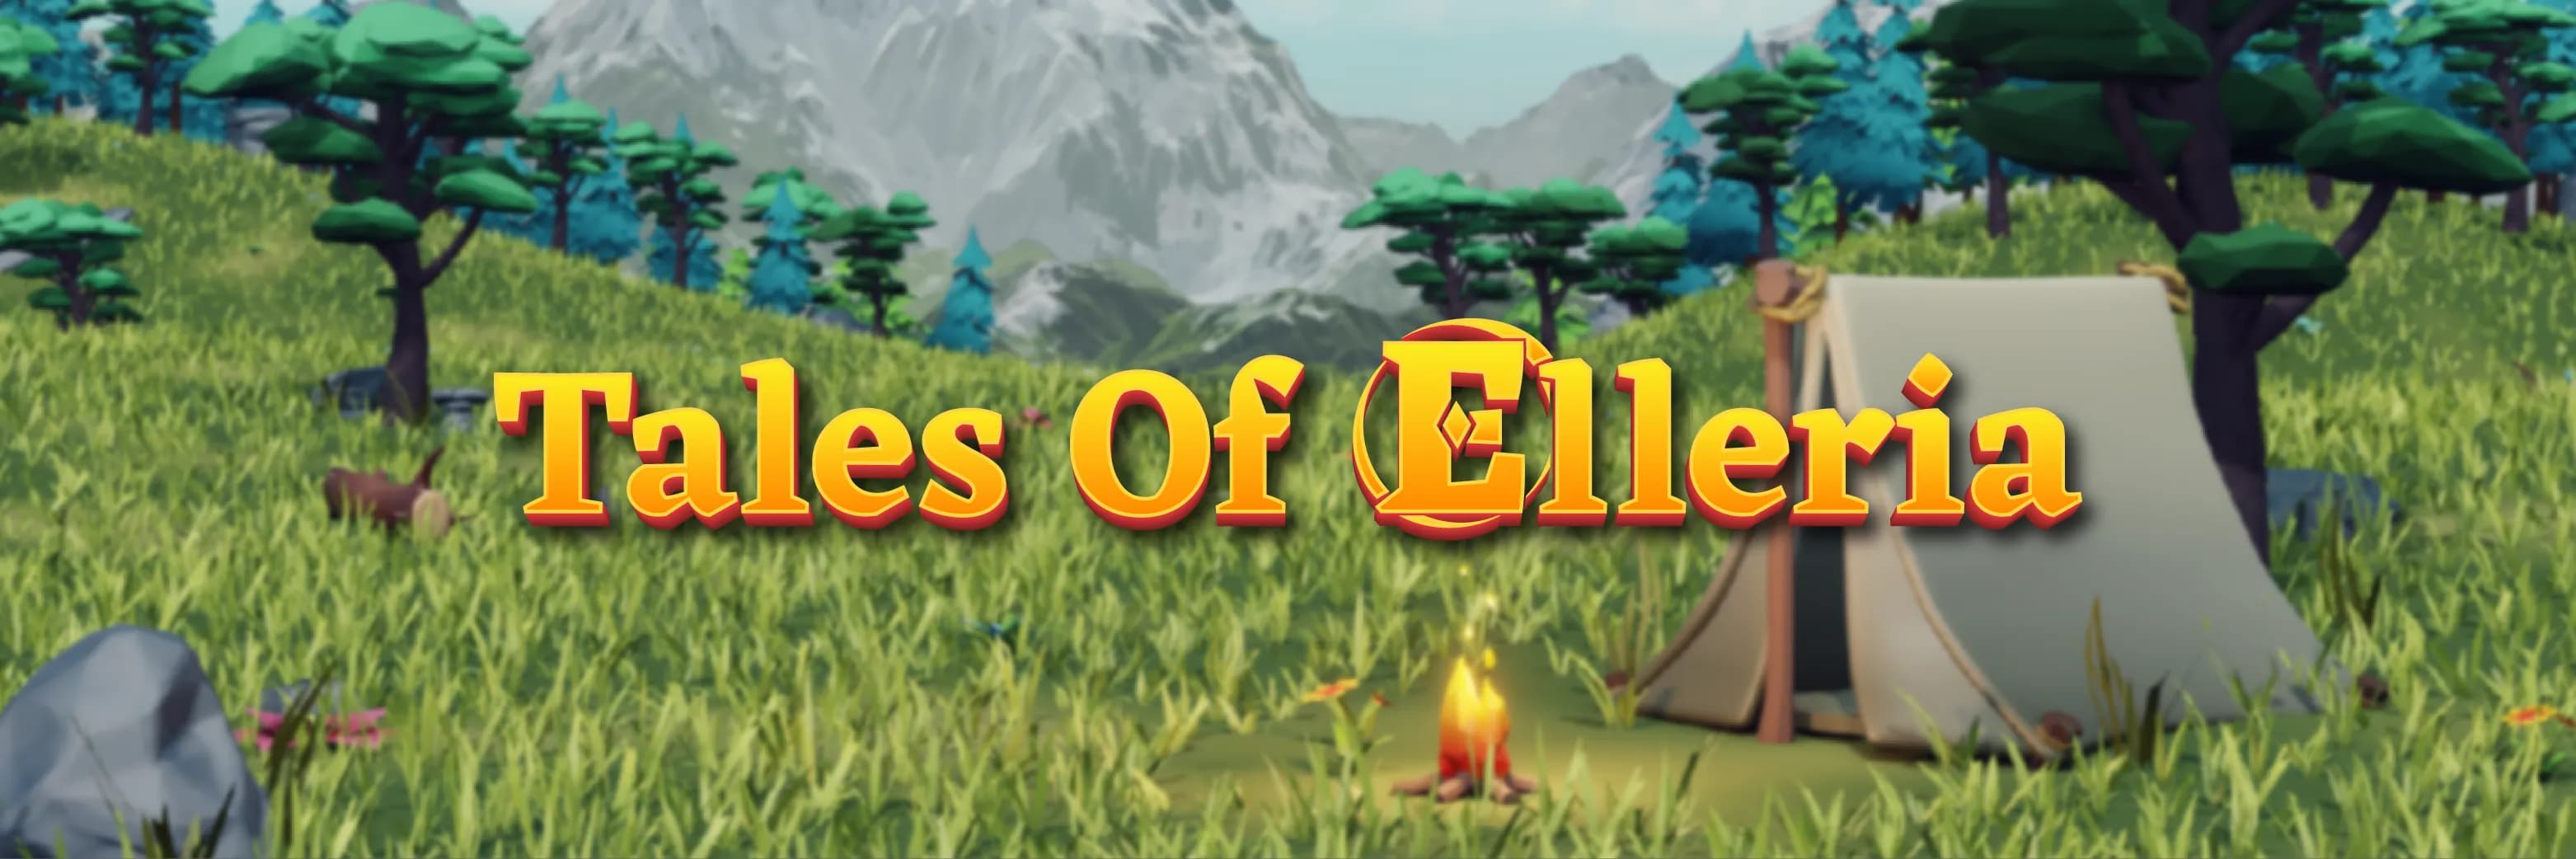 Tales Of Elleria thumbnail